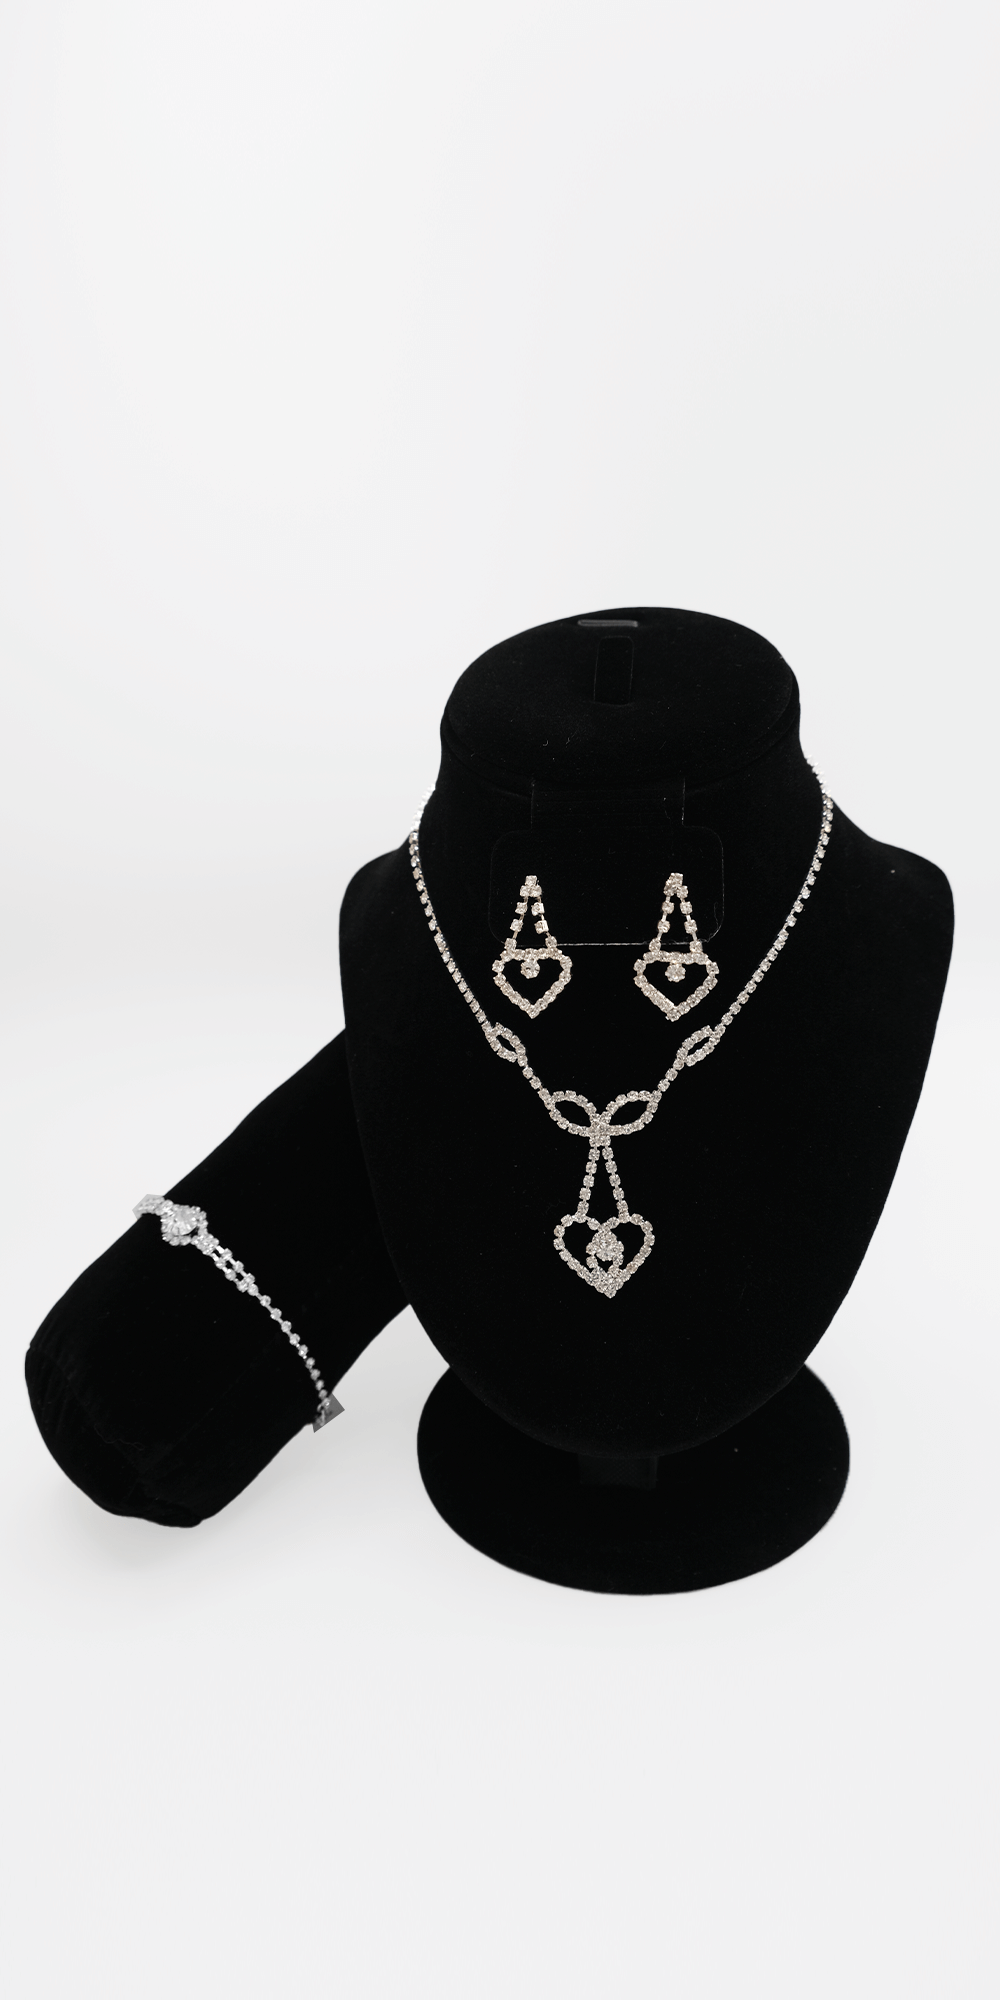 Camille La Vie Open Heart Rhinestone Necklace Earring and Bracelet Set OS / silver